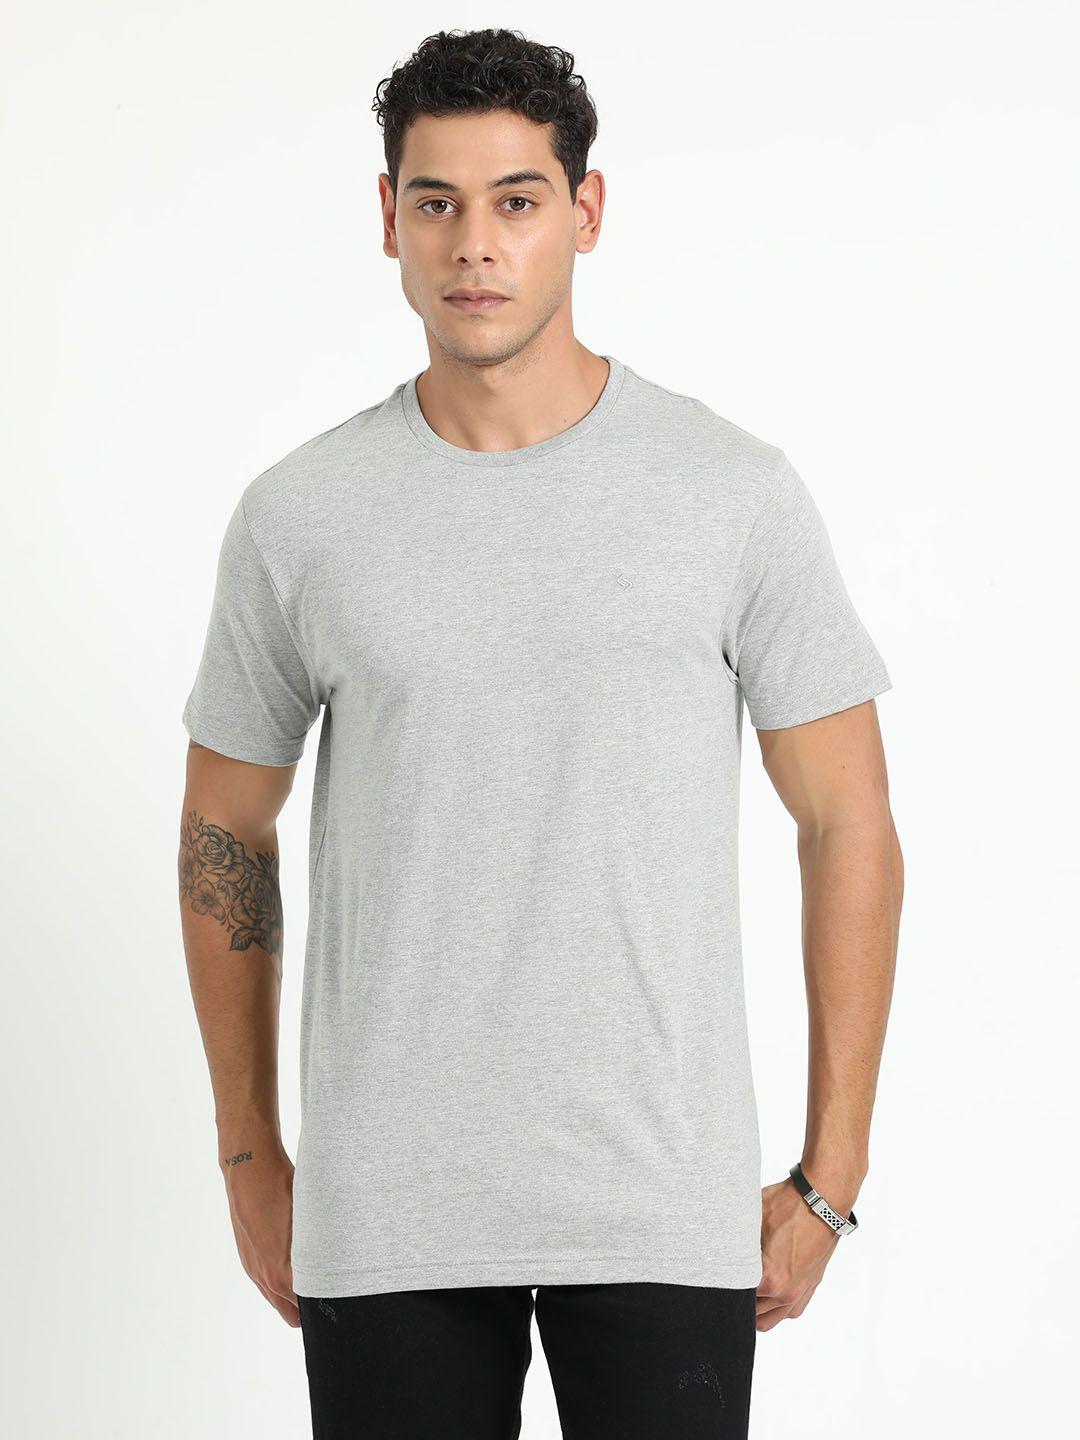 classic polo round neck cotton slim fit t-shirt